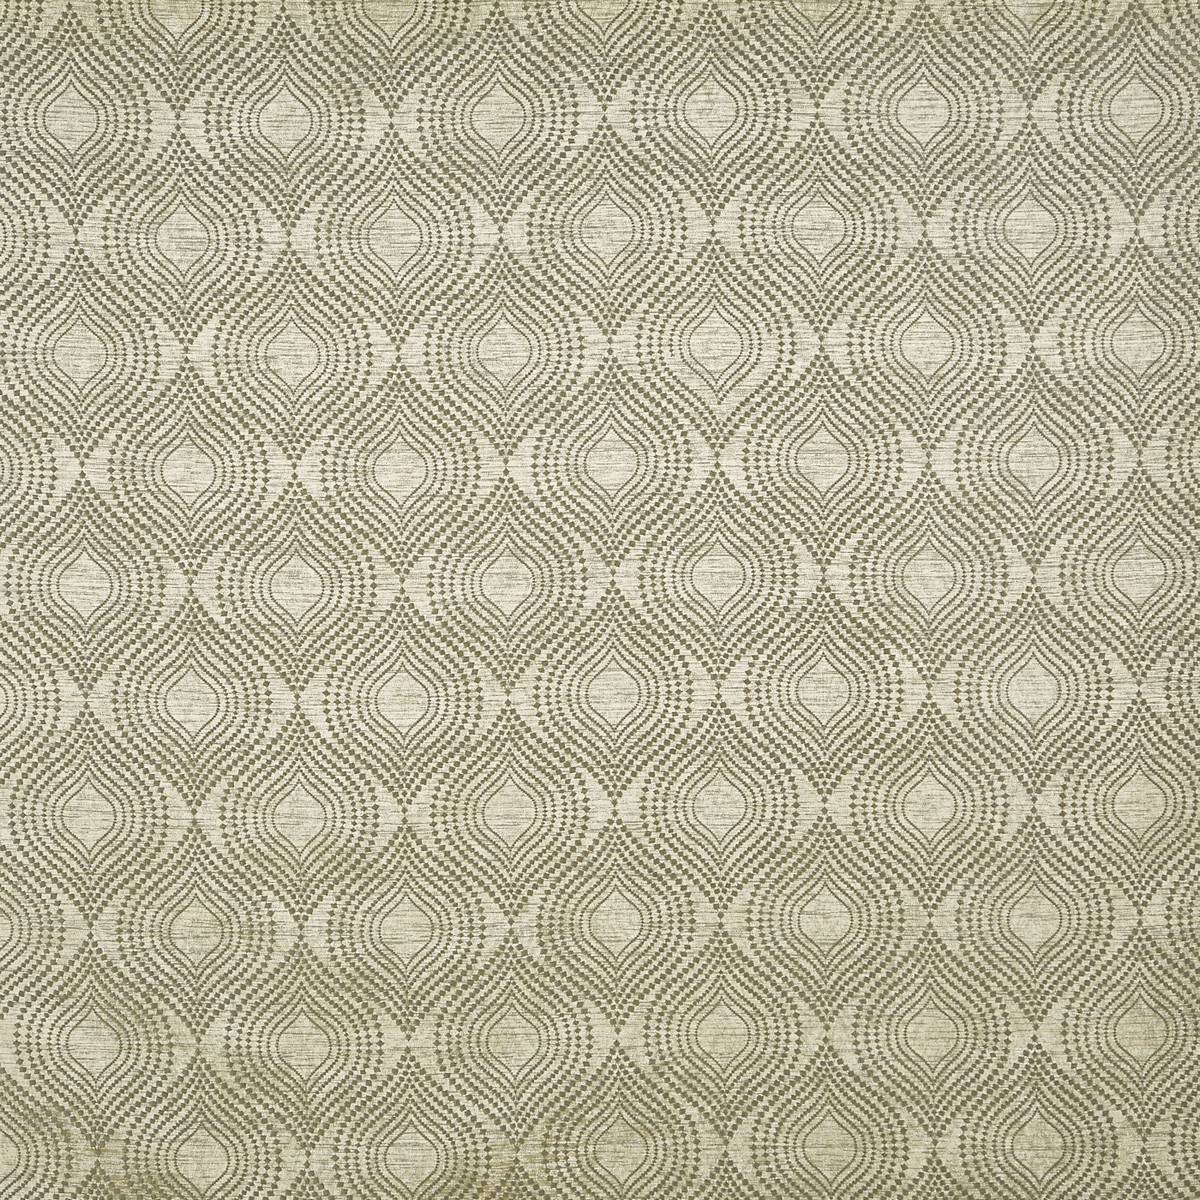 Radiance Pumice Fabric by Prestigious Textiles